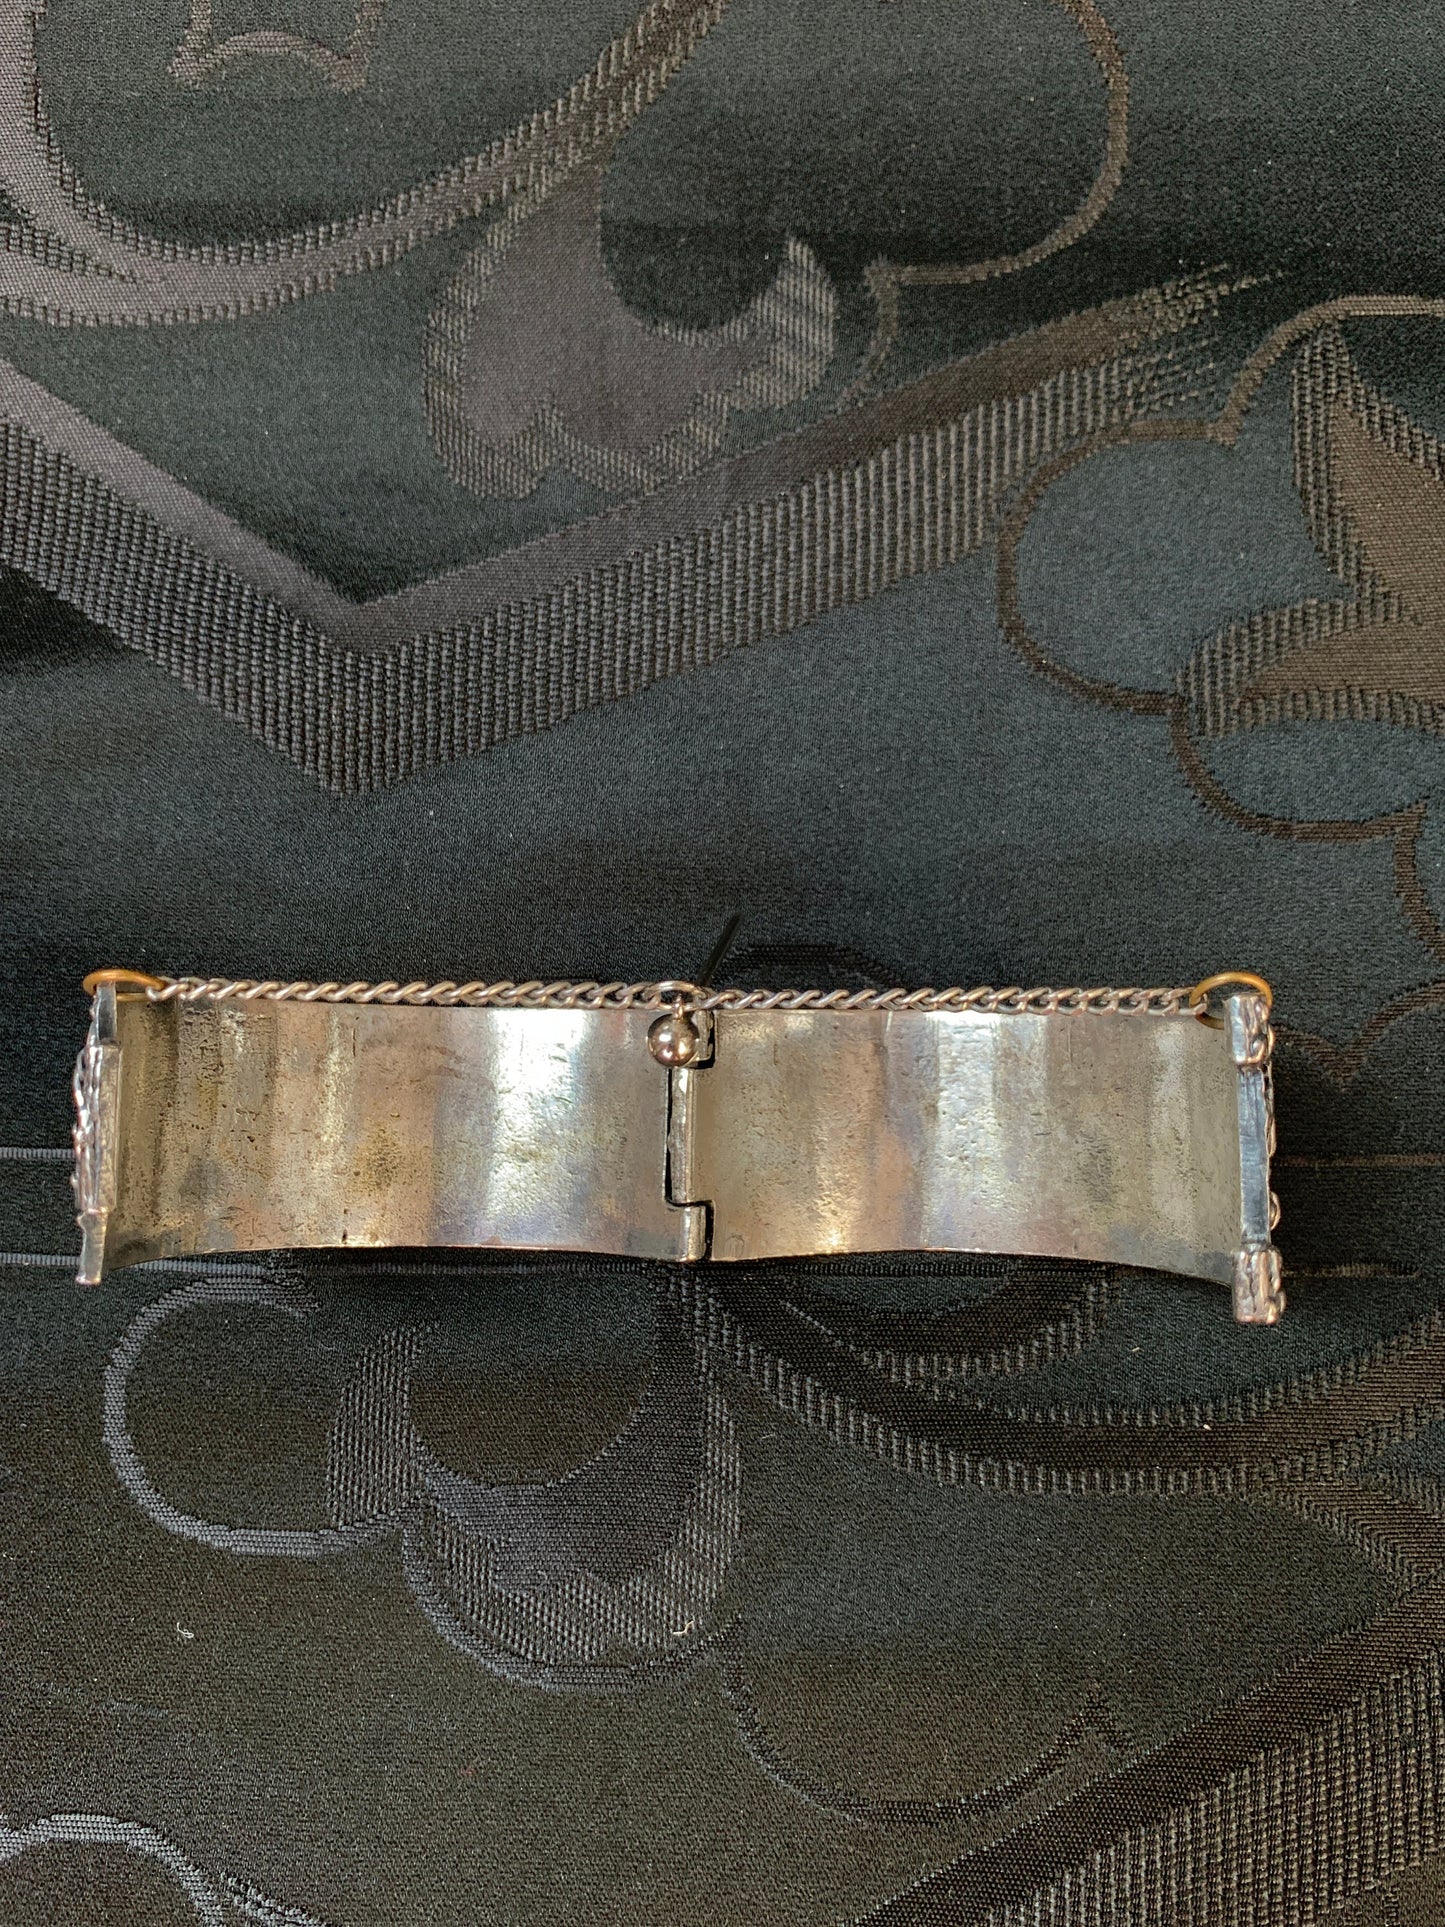 Vintage Robert Larin Hinged Bracelet